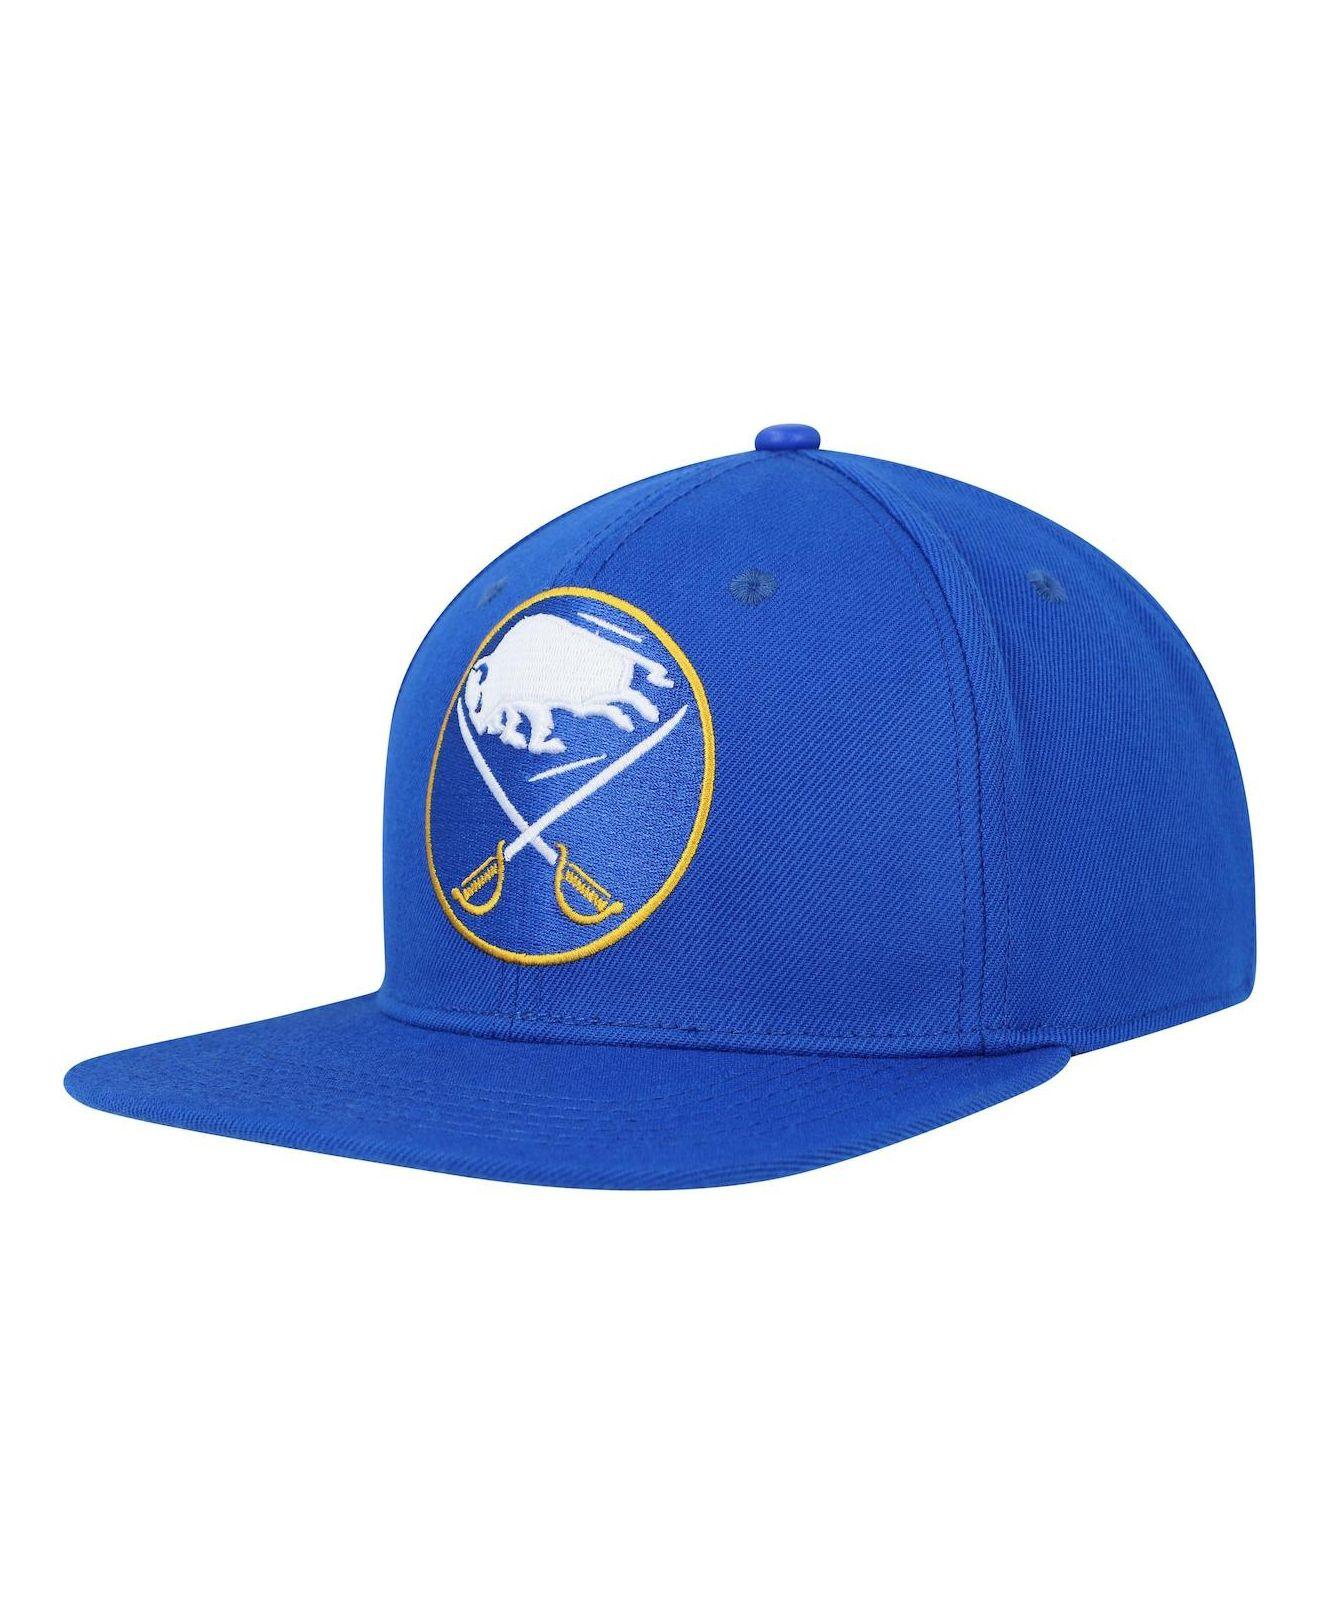 Buffalo Sabres Men's Adidas Structured Snapback Hat